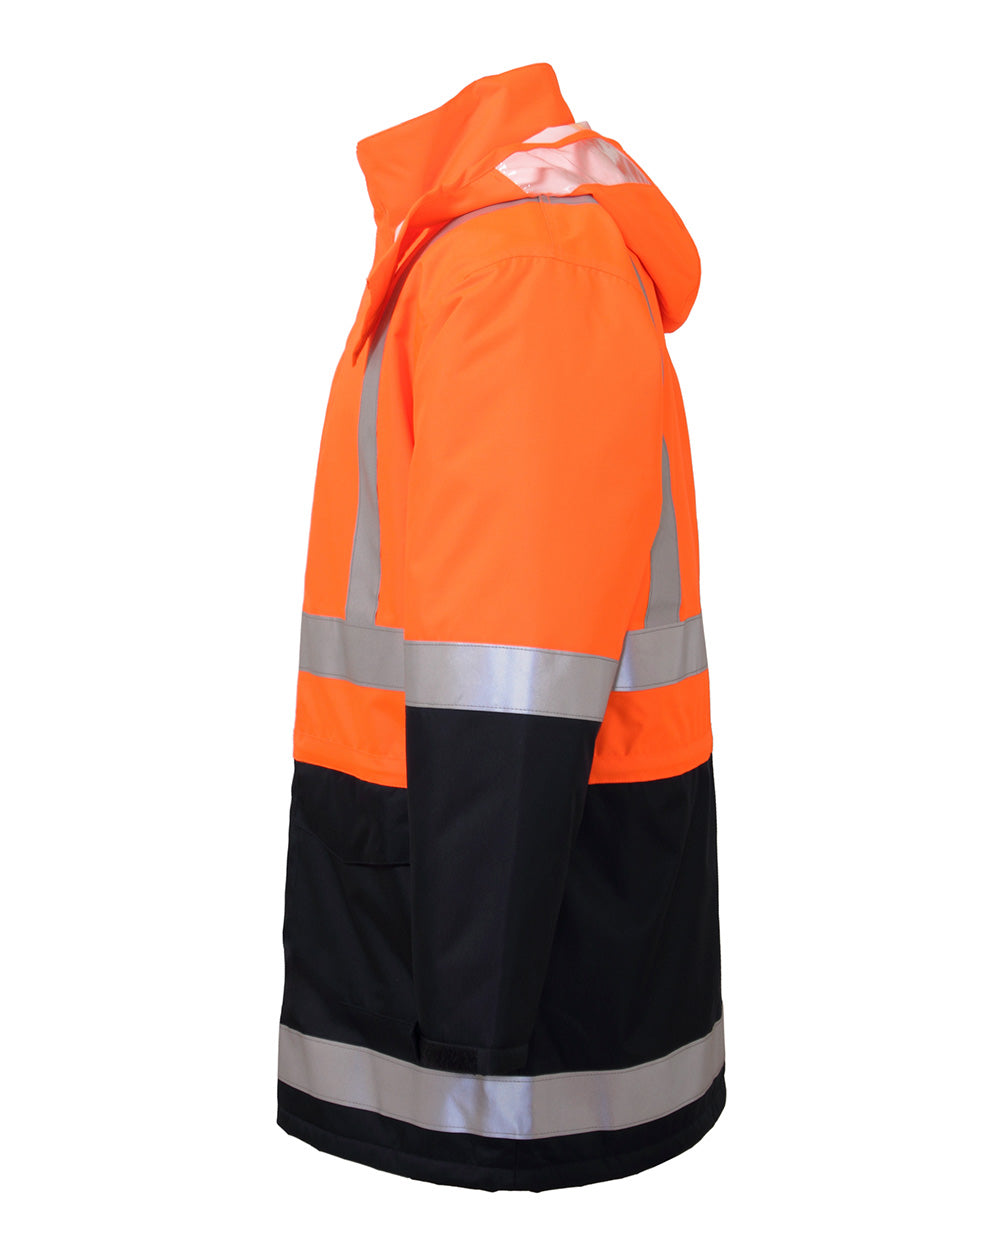 Sentinel Jacket in Fluoro Orange & Navy